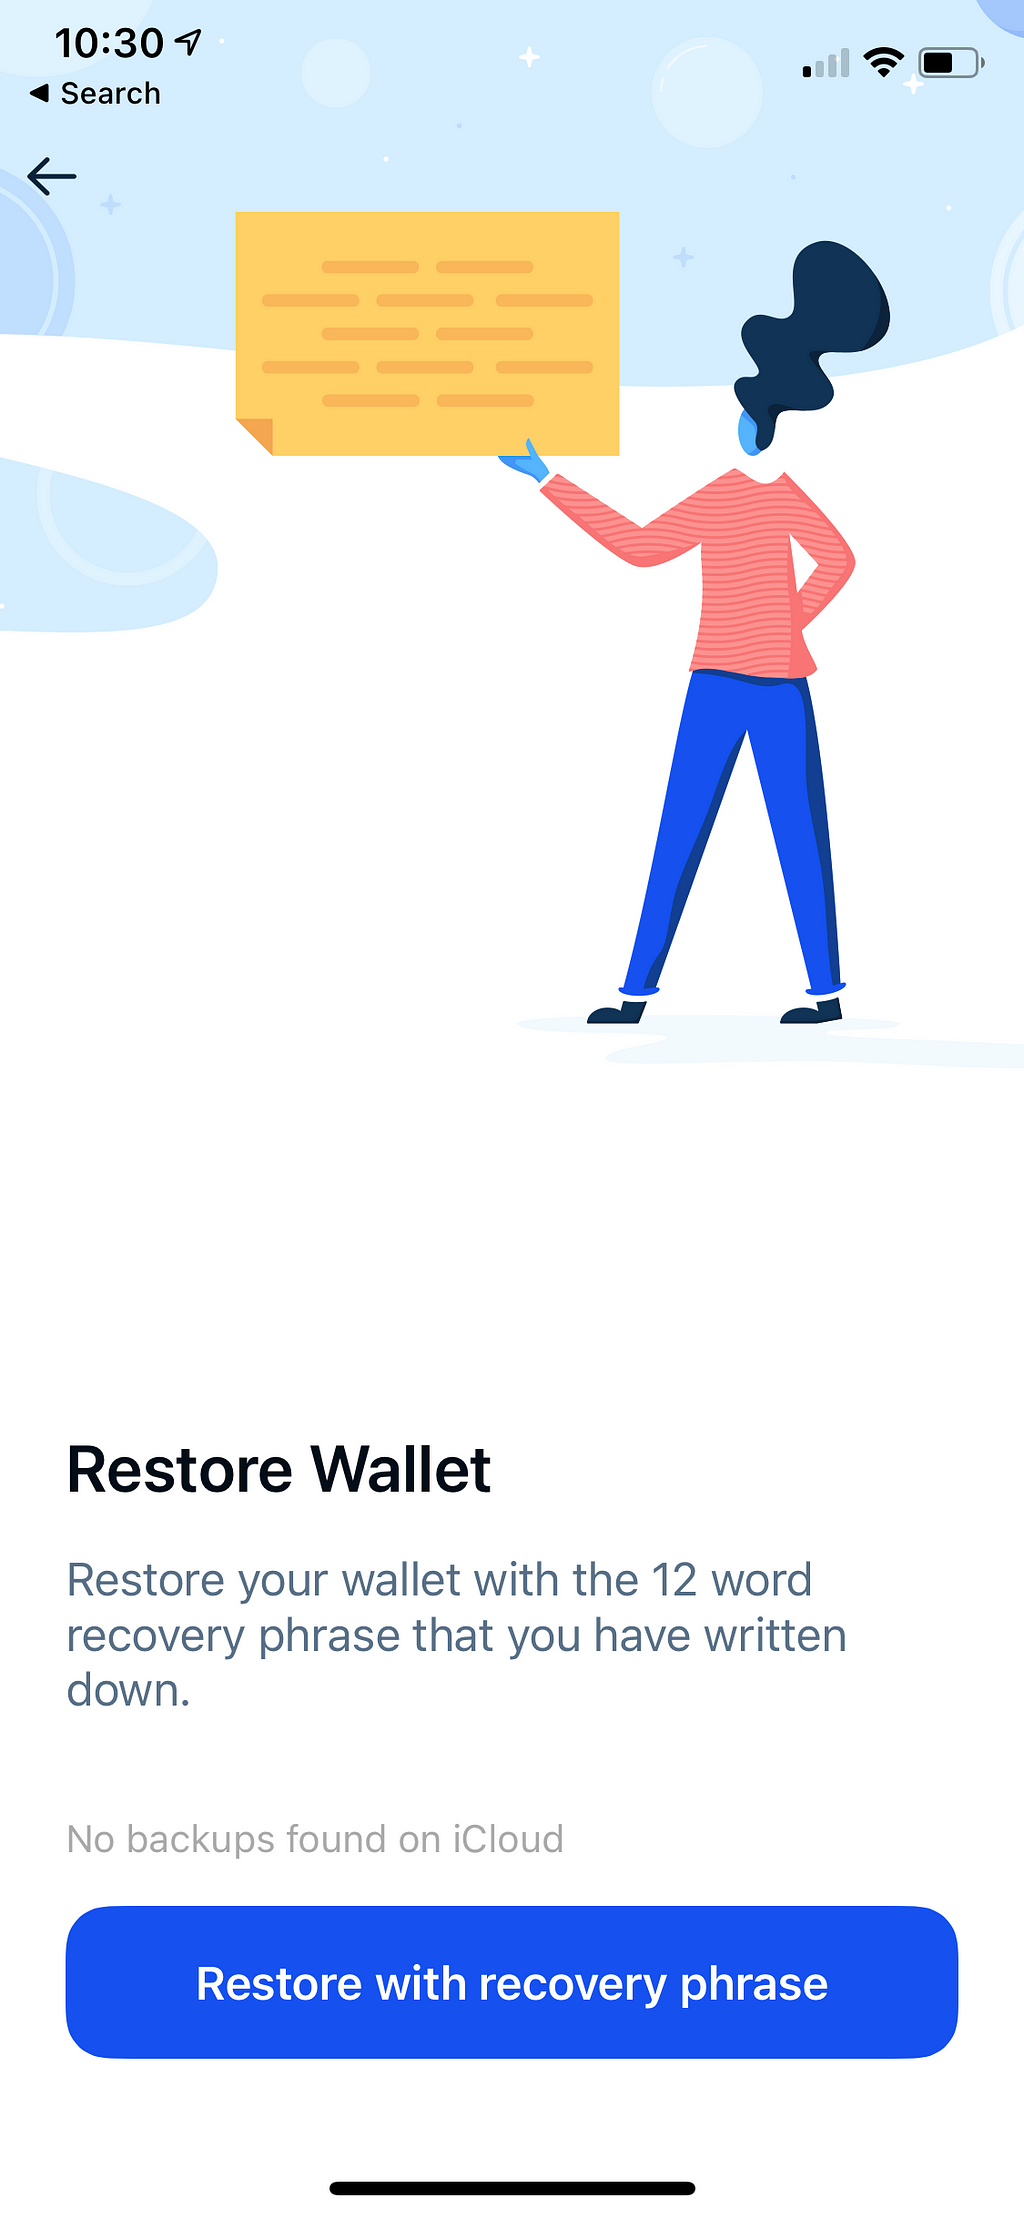 Coinbase Wallet screenshot